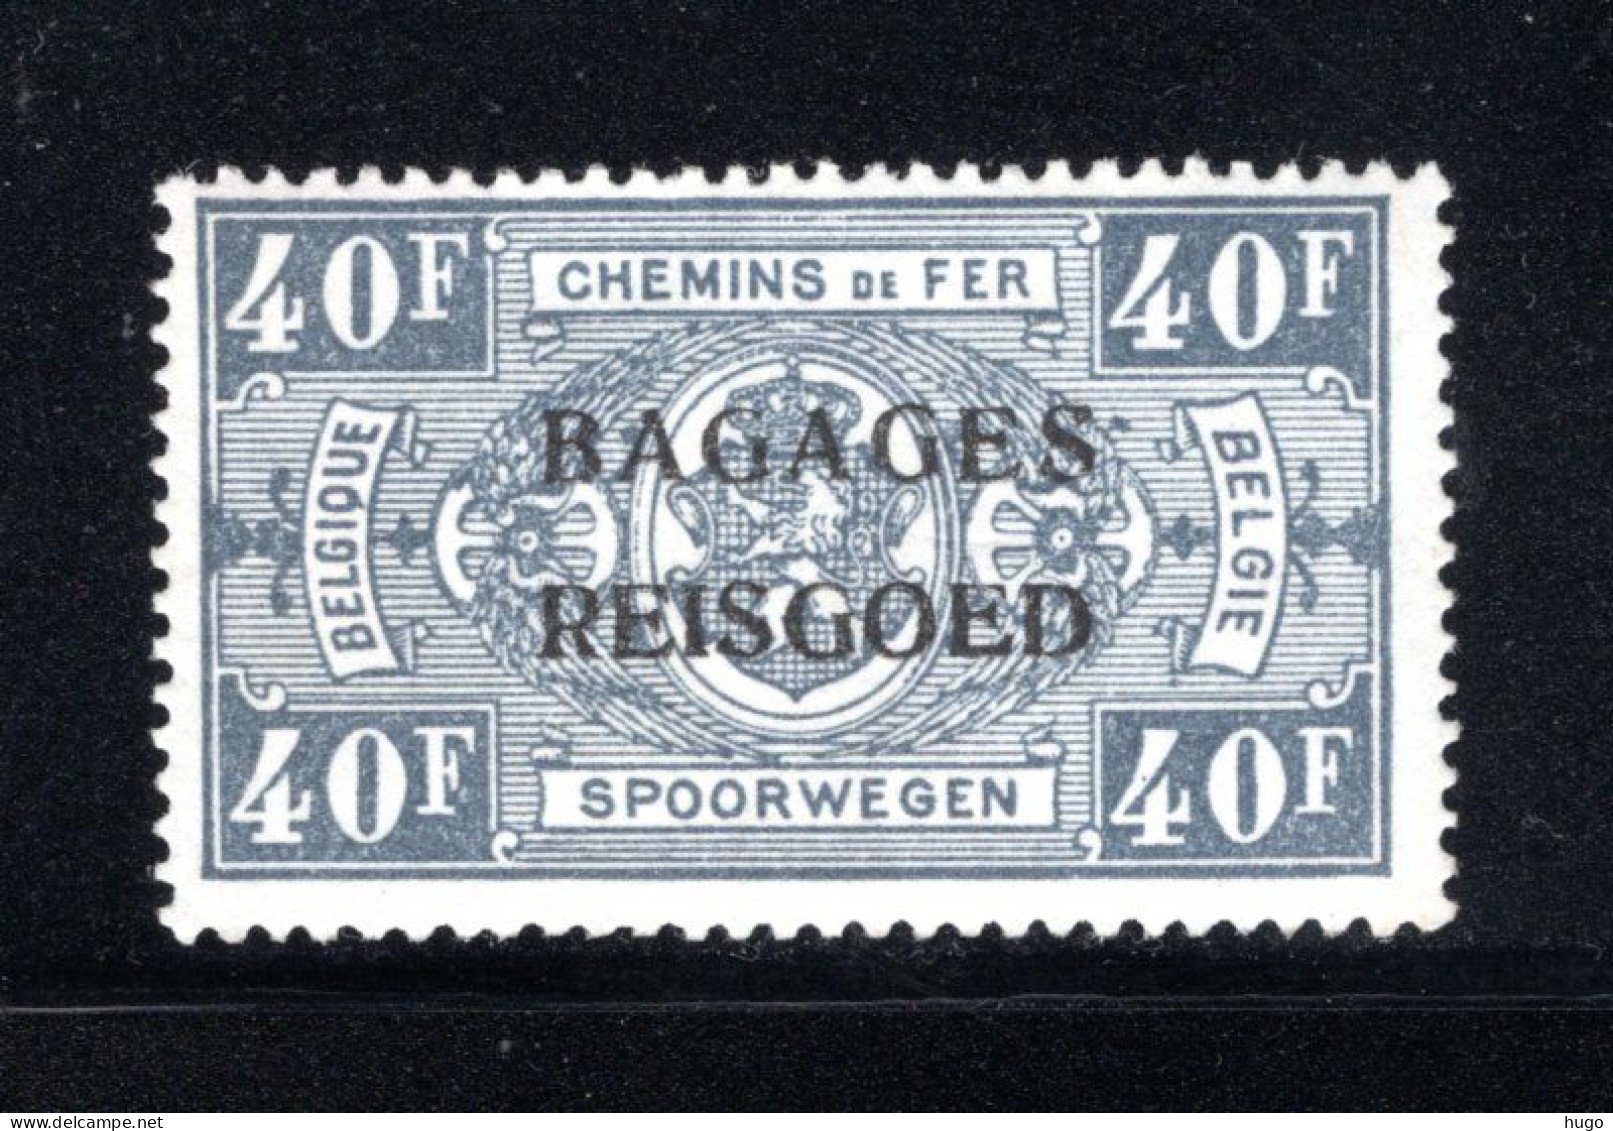 BA22 MNH 1935 - Spoorwegzegels BAGAGES - REISGOED - Bagagli [BA]